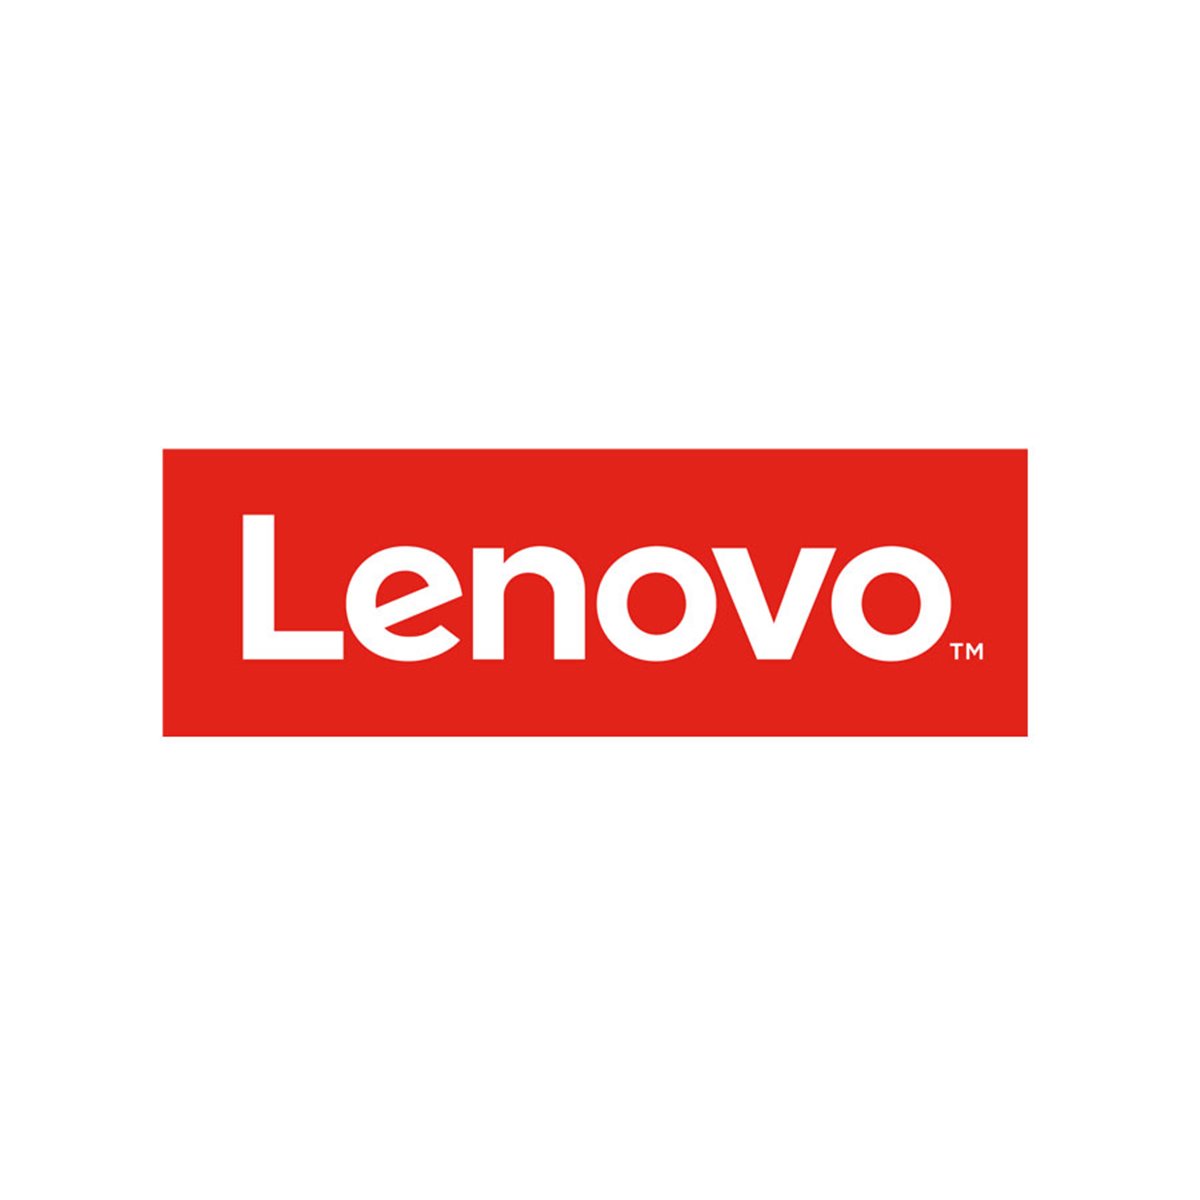 Lenovo Storwize Family for V700 - FlashCopy